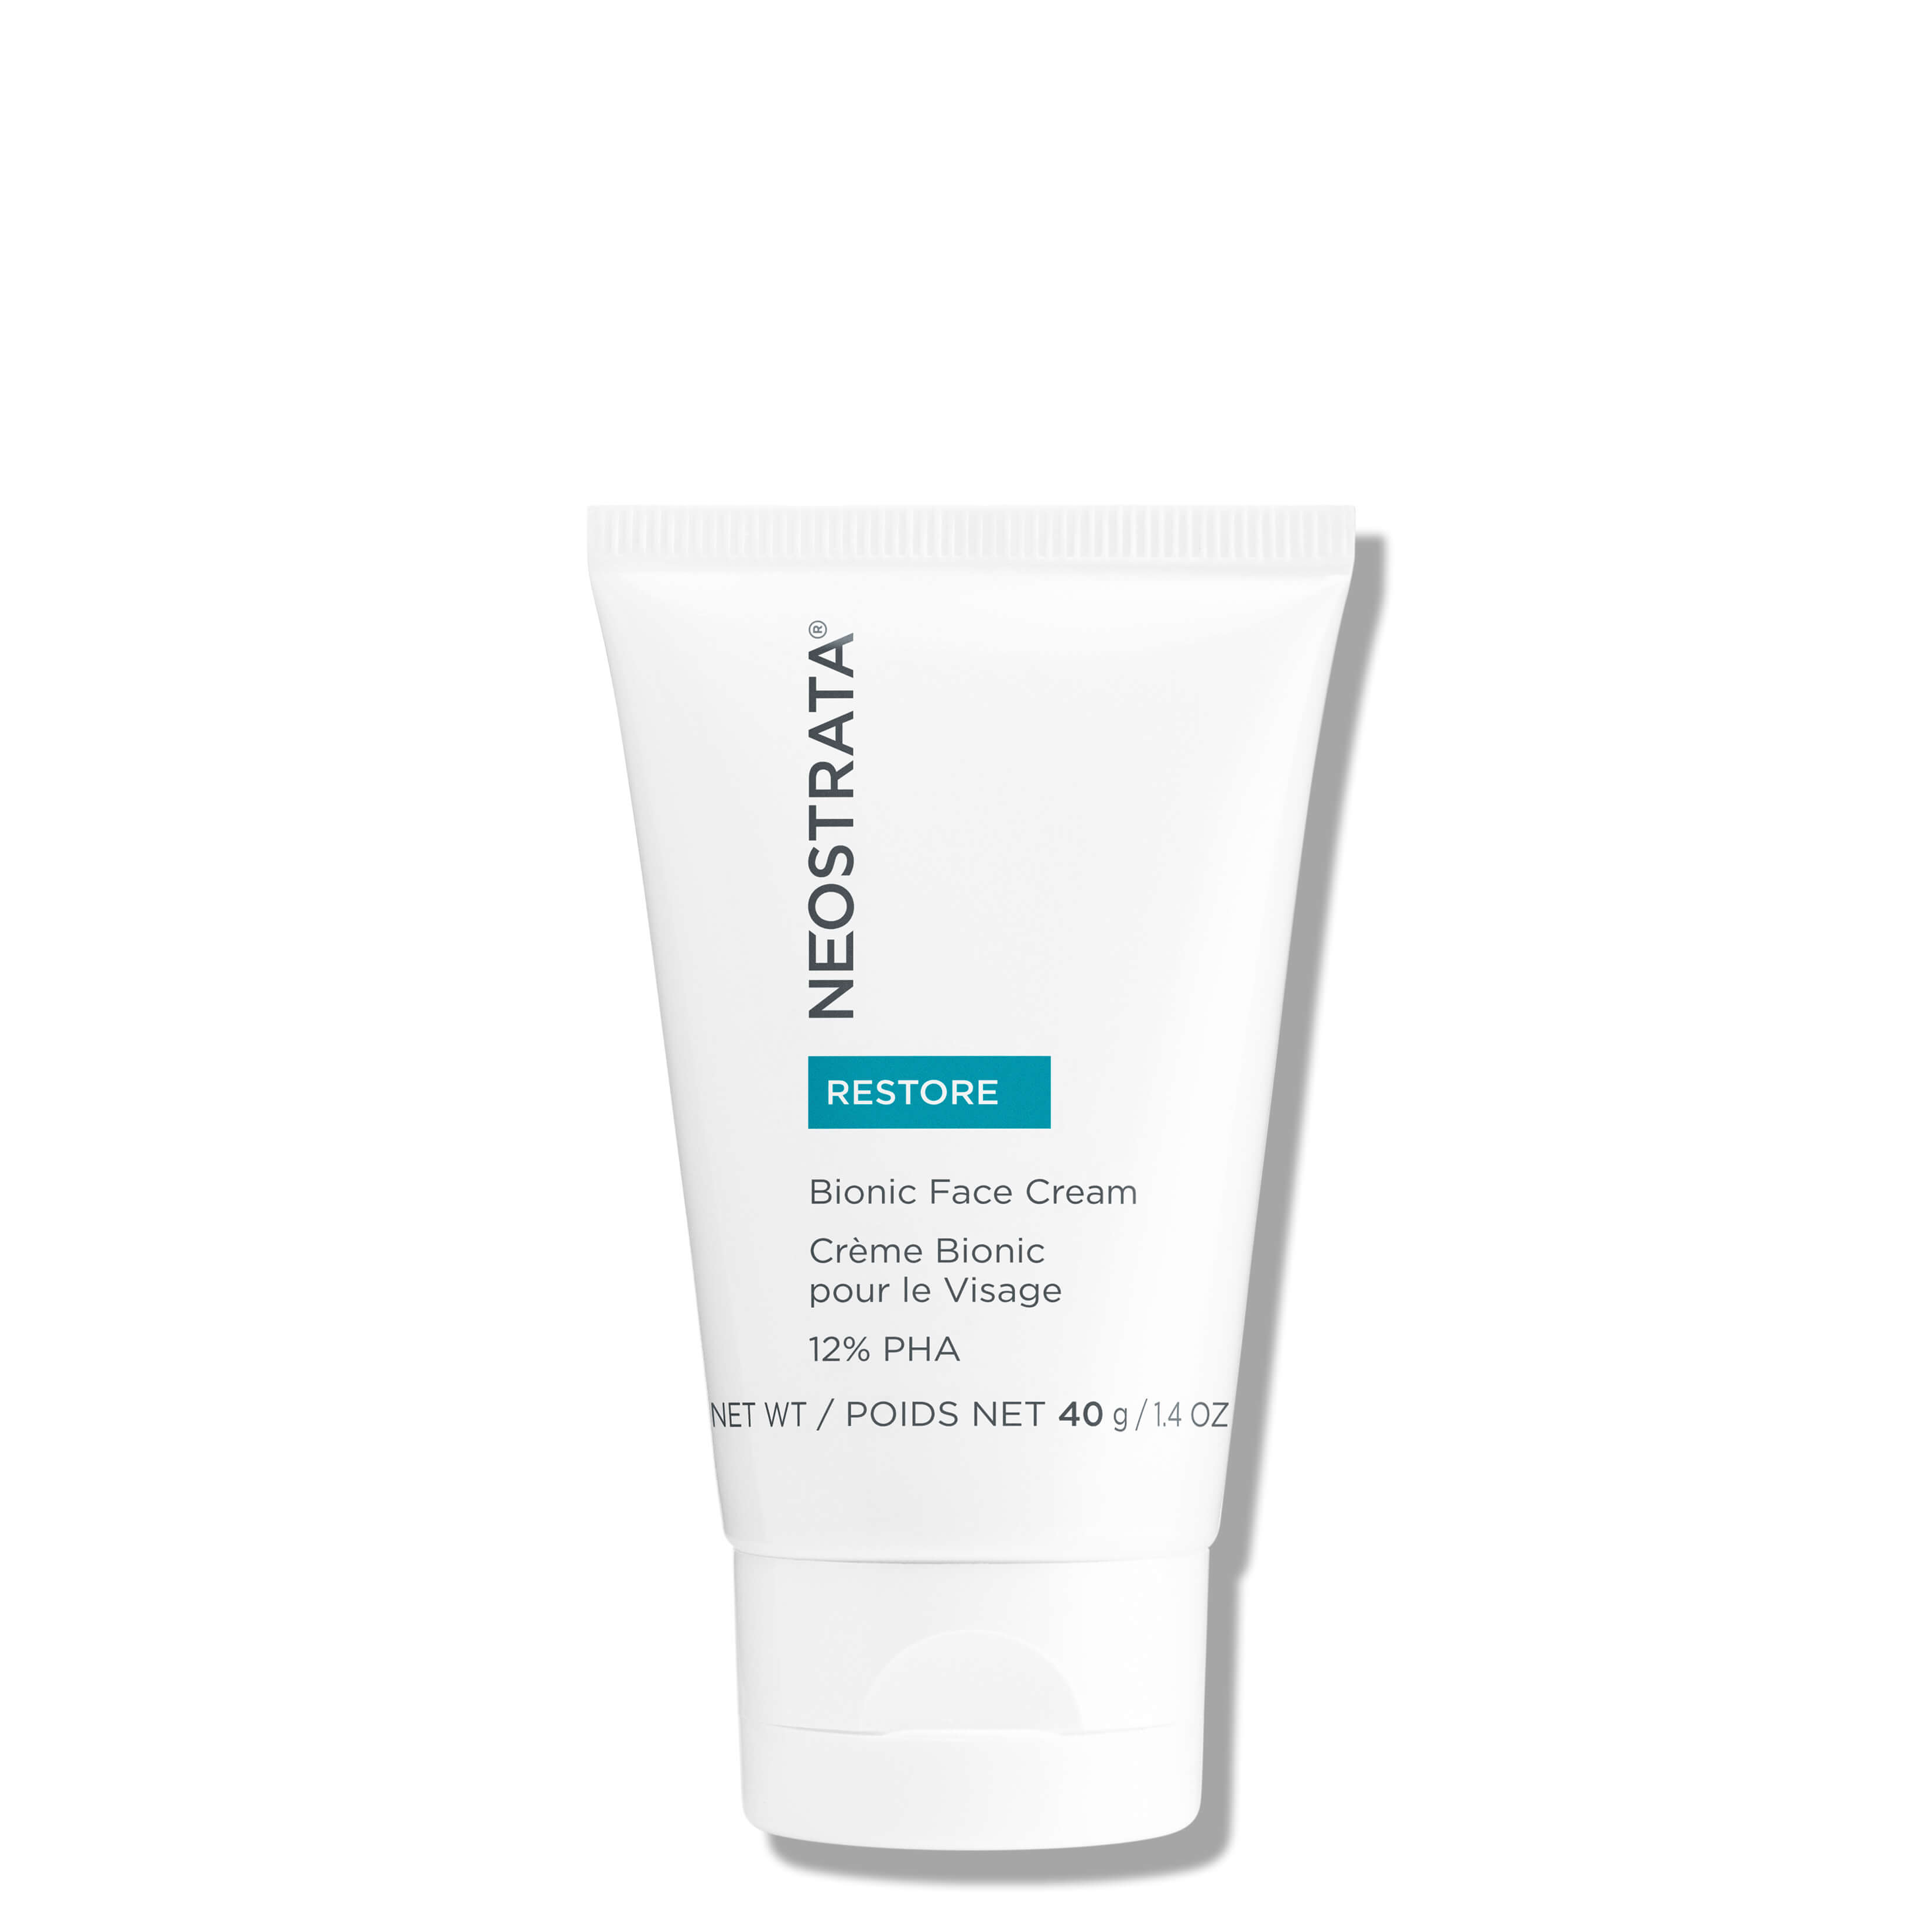 NeoStrata Bionic Face Cream | Reparative Emollient | 12% PHA Blend | Anti-Aging